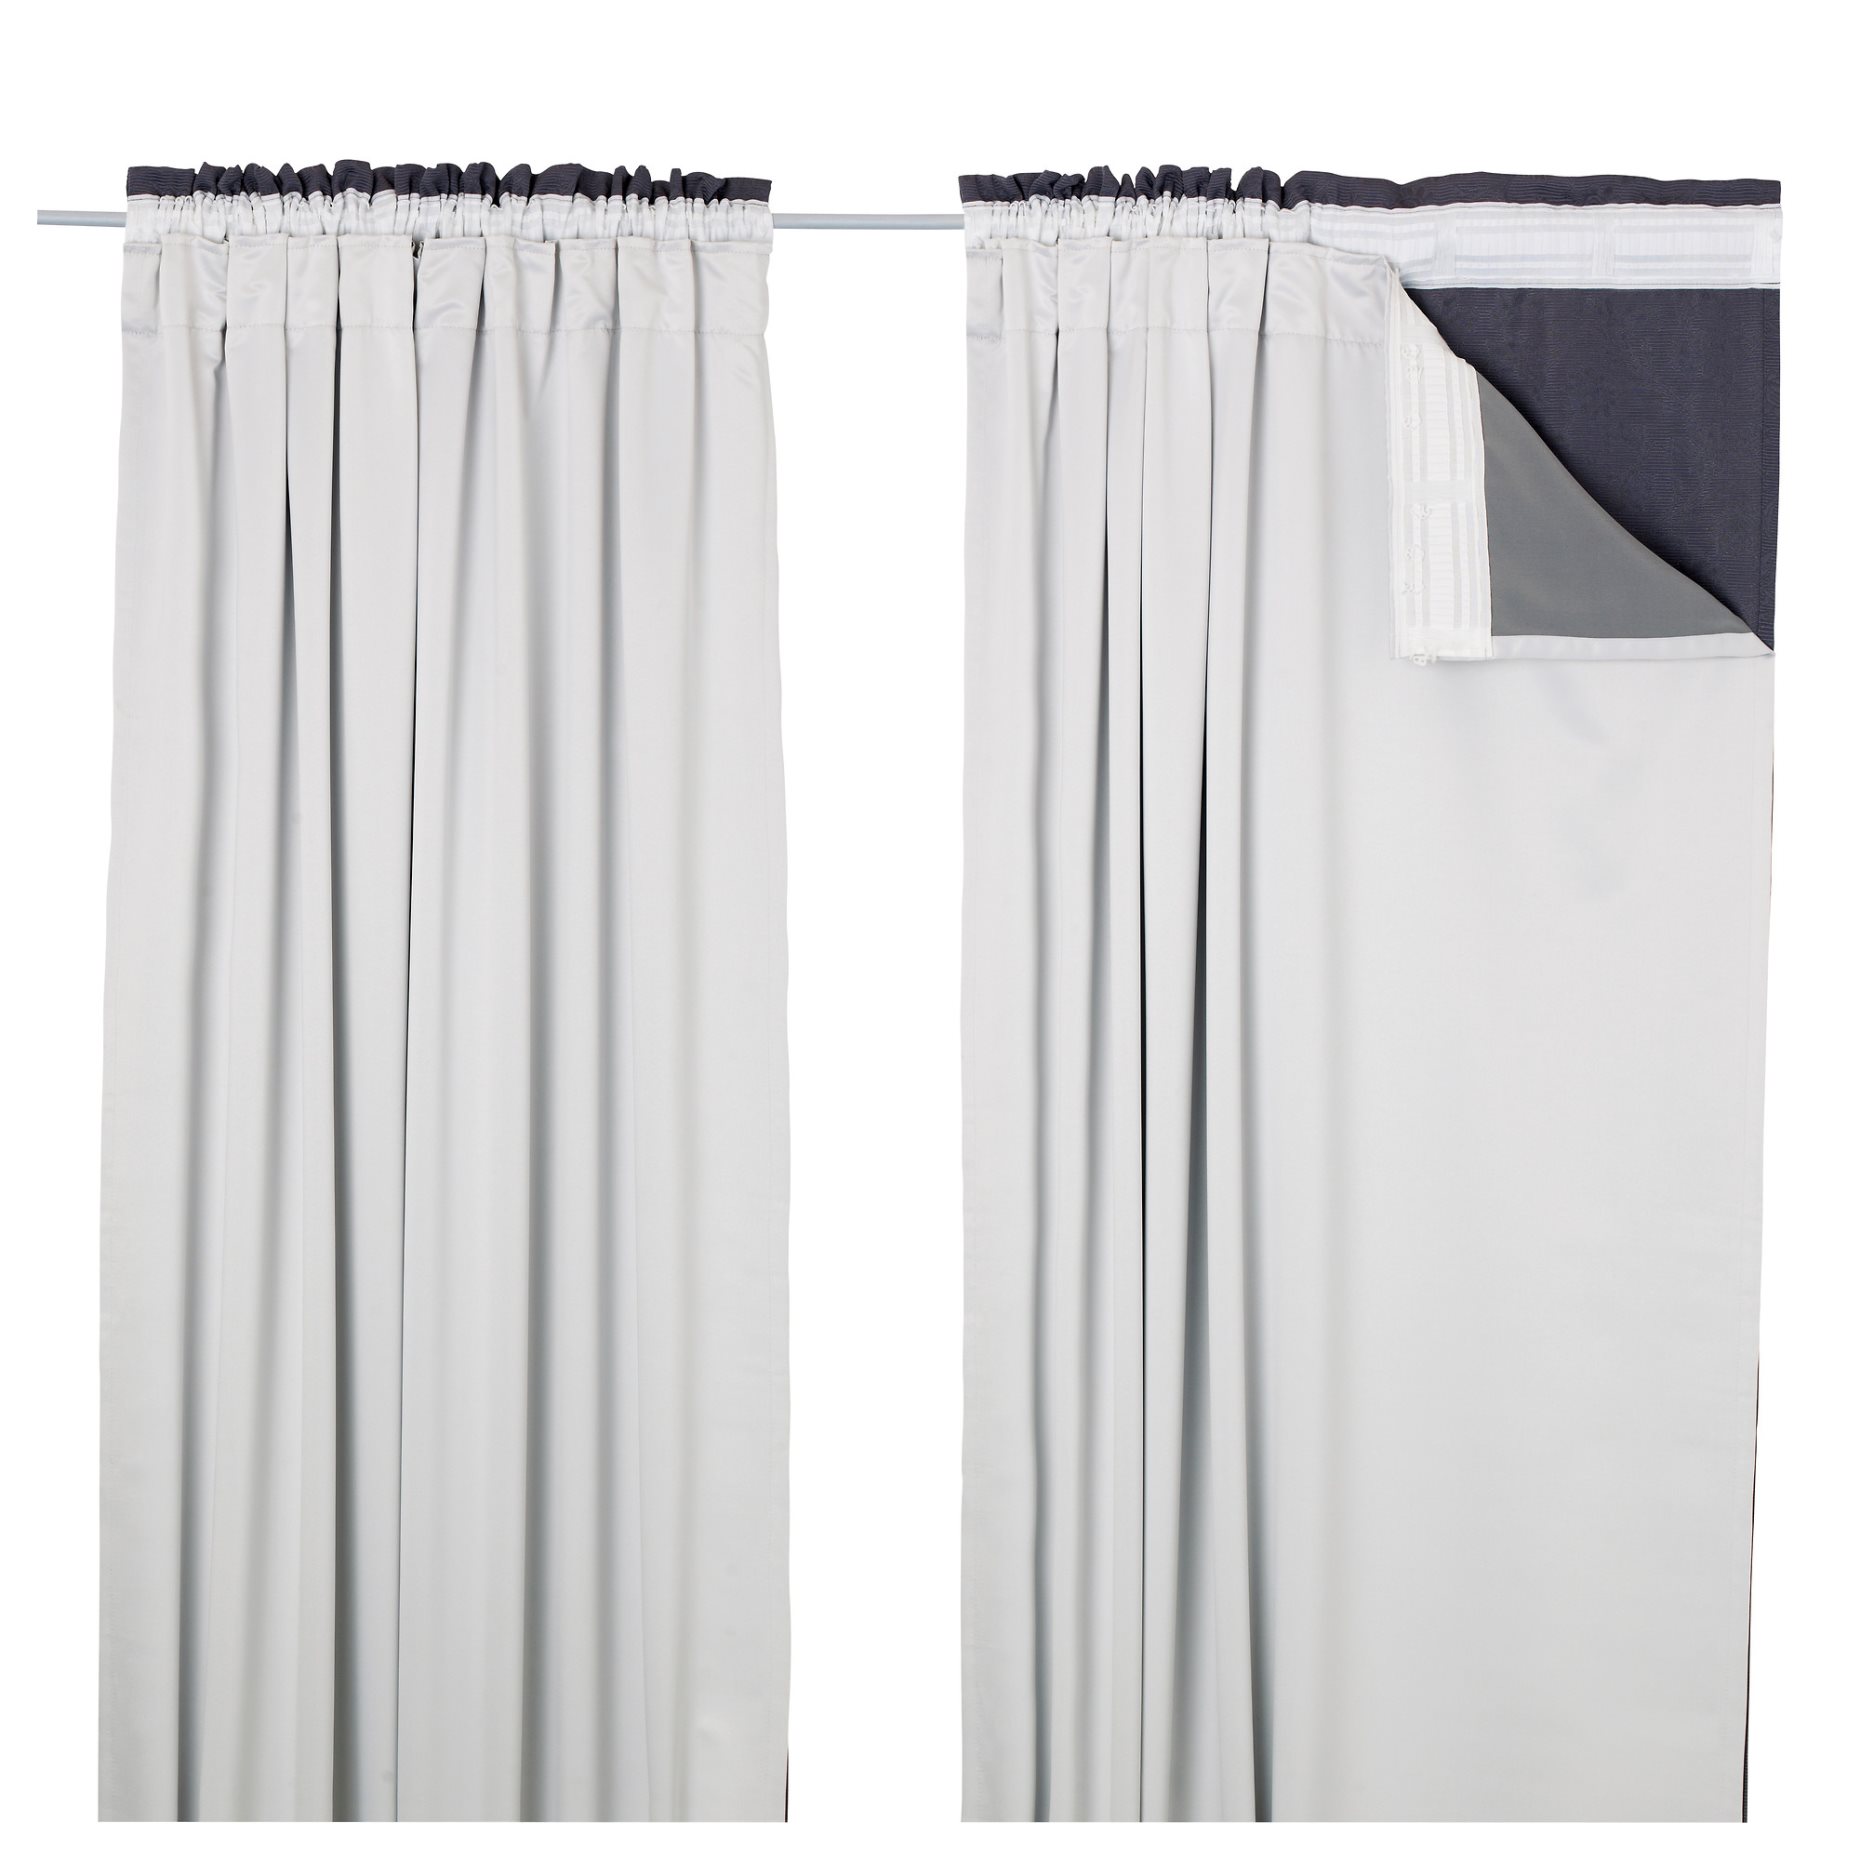 GLANSNÄVA, curtain liners, 1 pair, 702.912.89